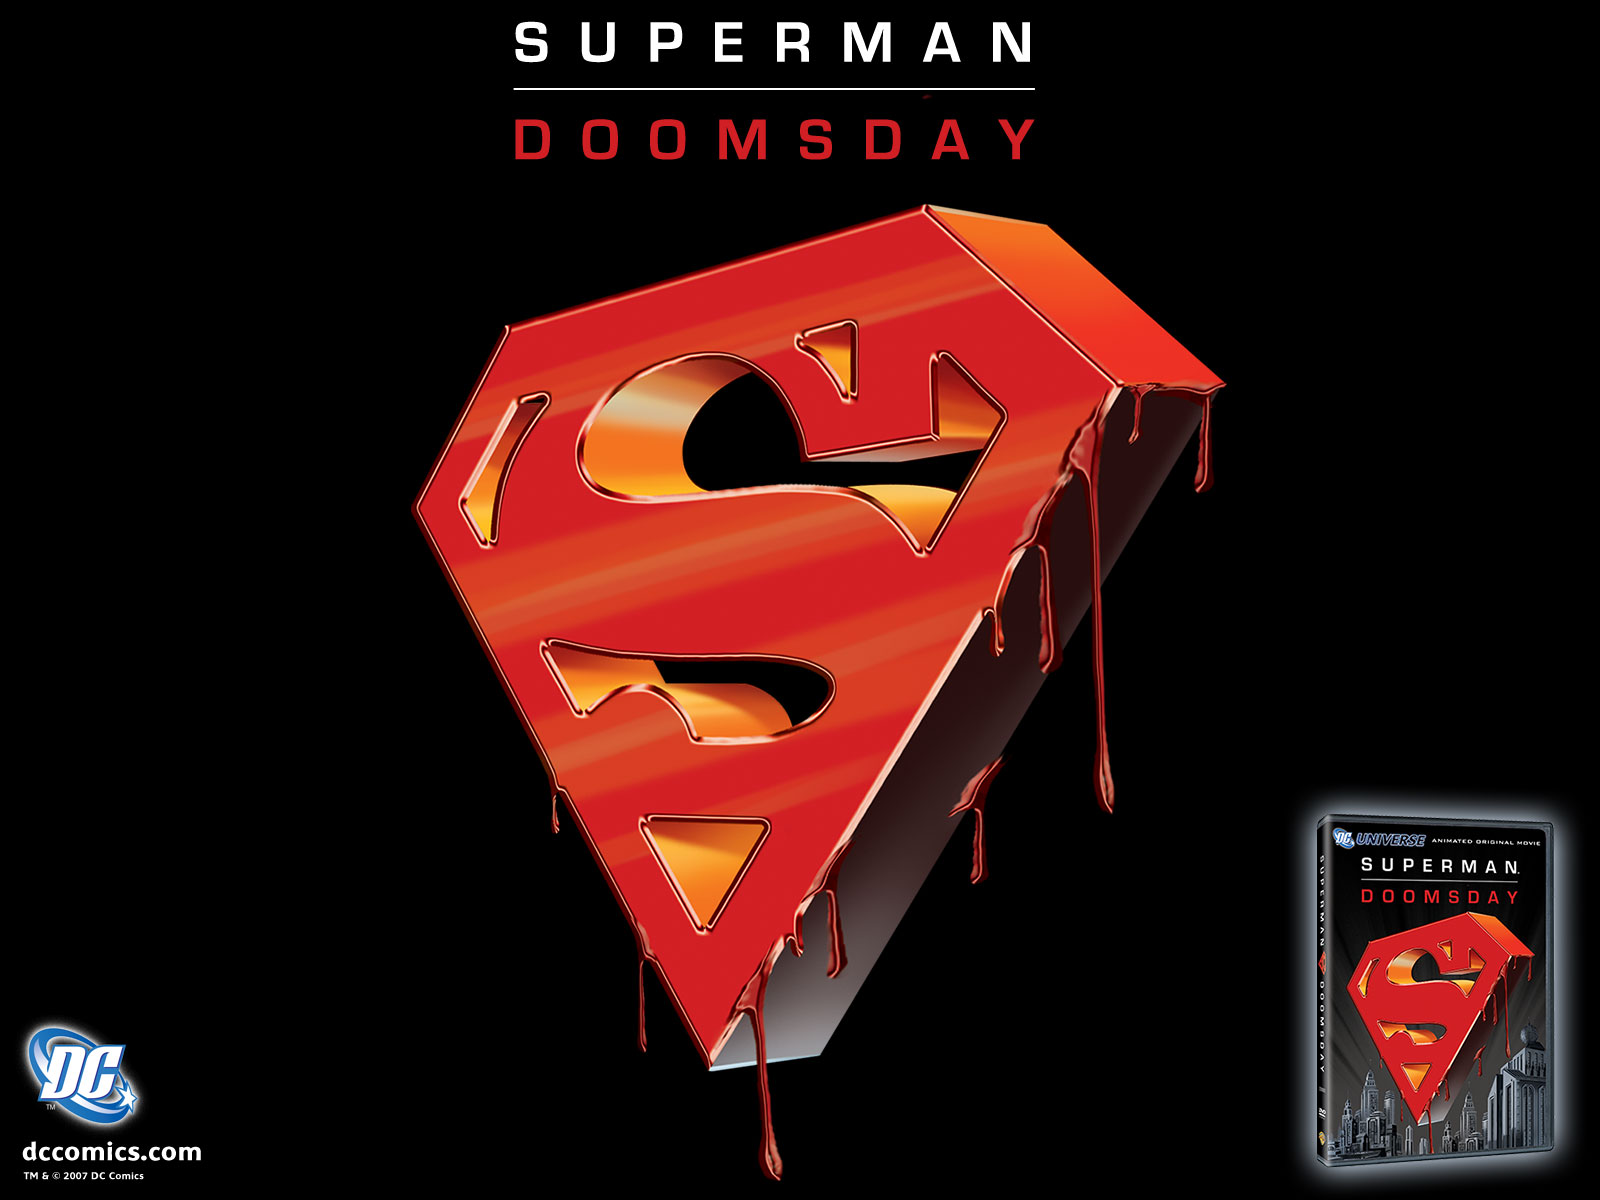 Superman Doomsday DVD 1600 x 1200